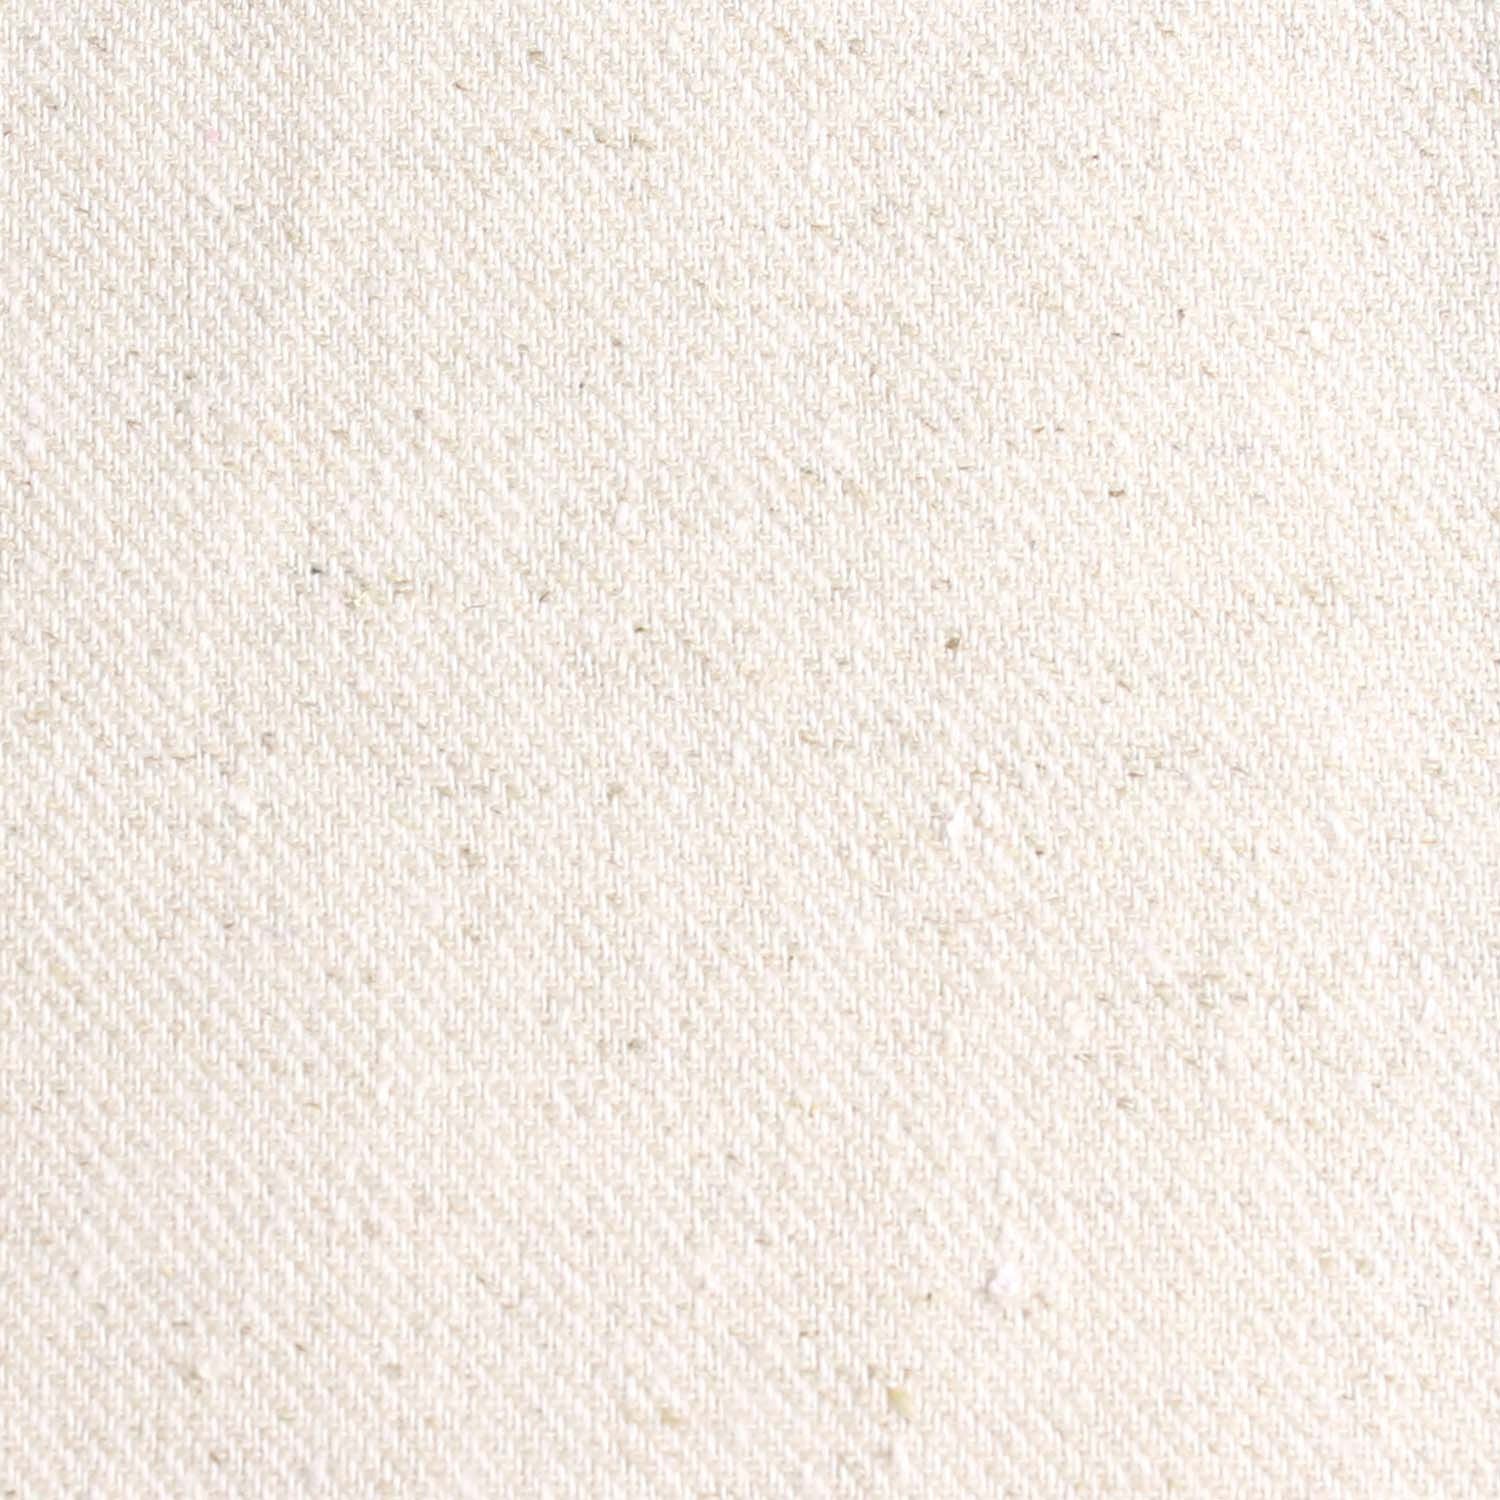 Khaki Twill Stripe Linen Fabric Pocket Square L184